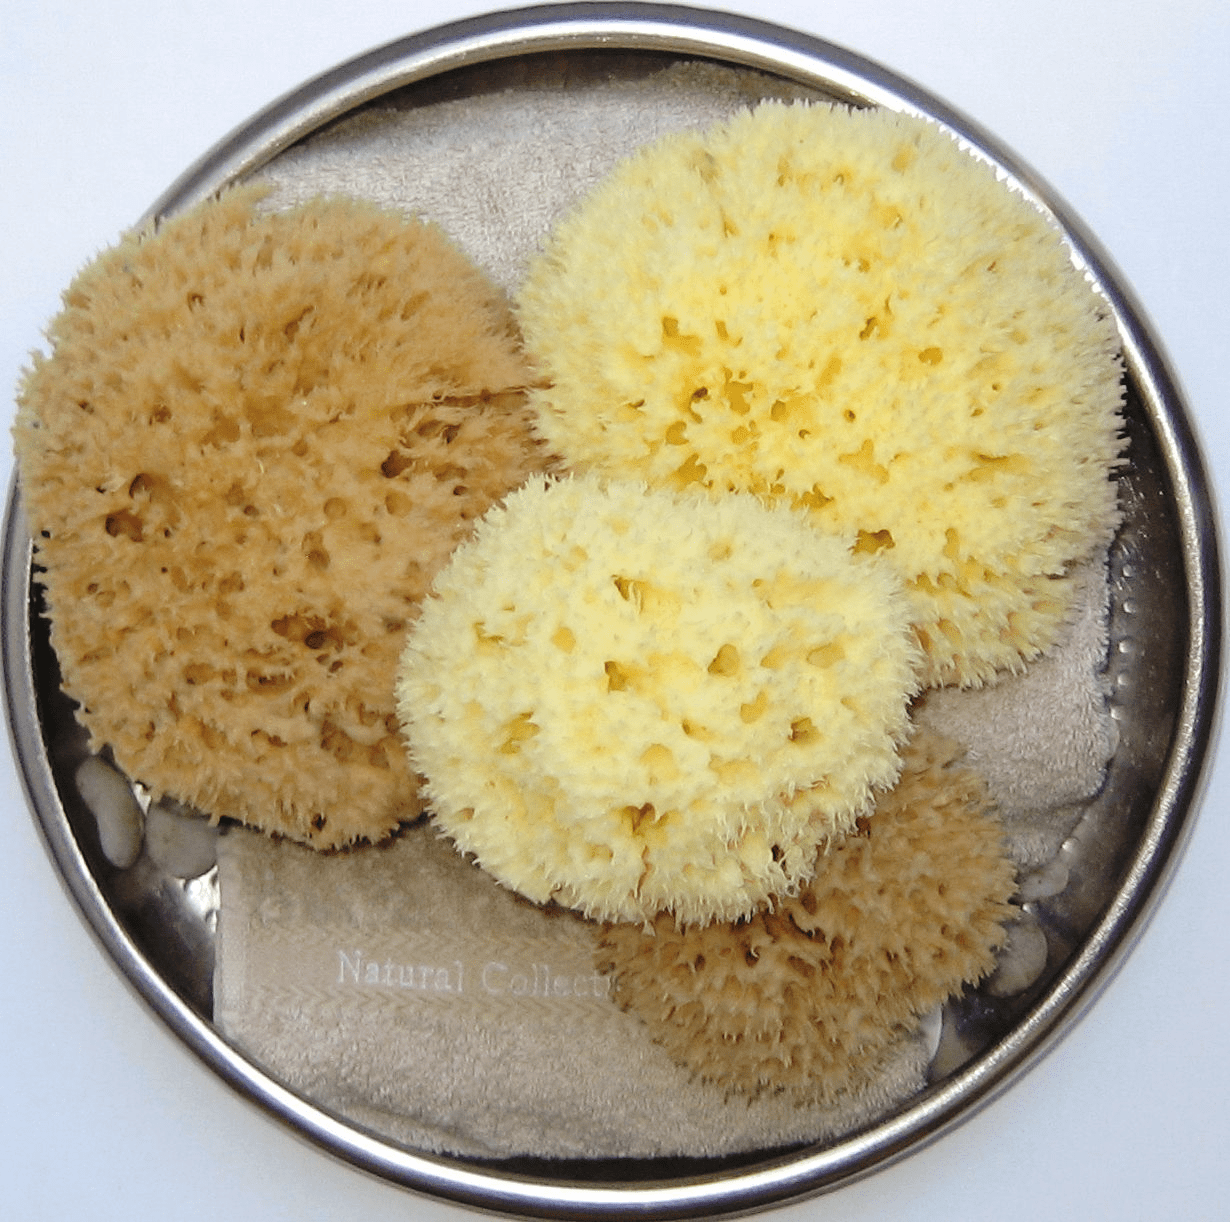 Honeycomb Sponges